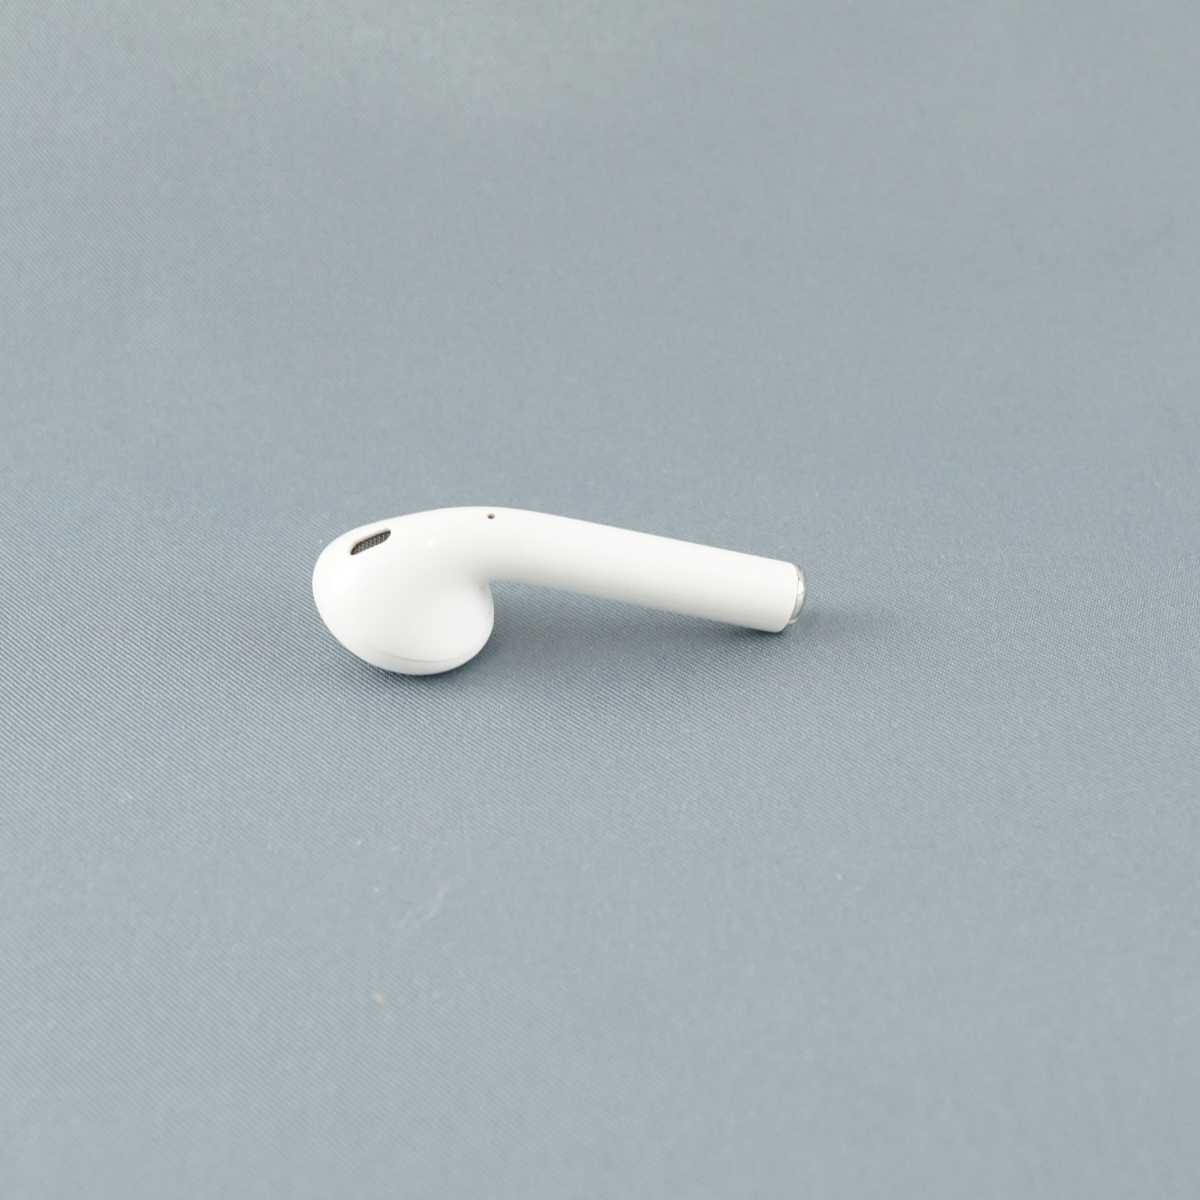 Apple AirPods エアーポッズ USED品 第一世代 右イヤホンのみ R 片耳 A1523 正規品 MMEF2J/A 完動品 V0207_画像2